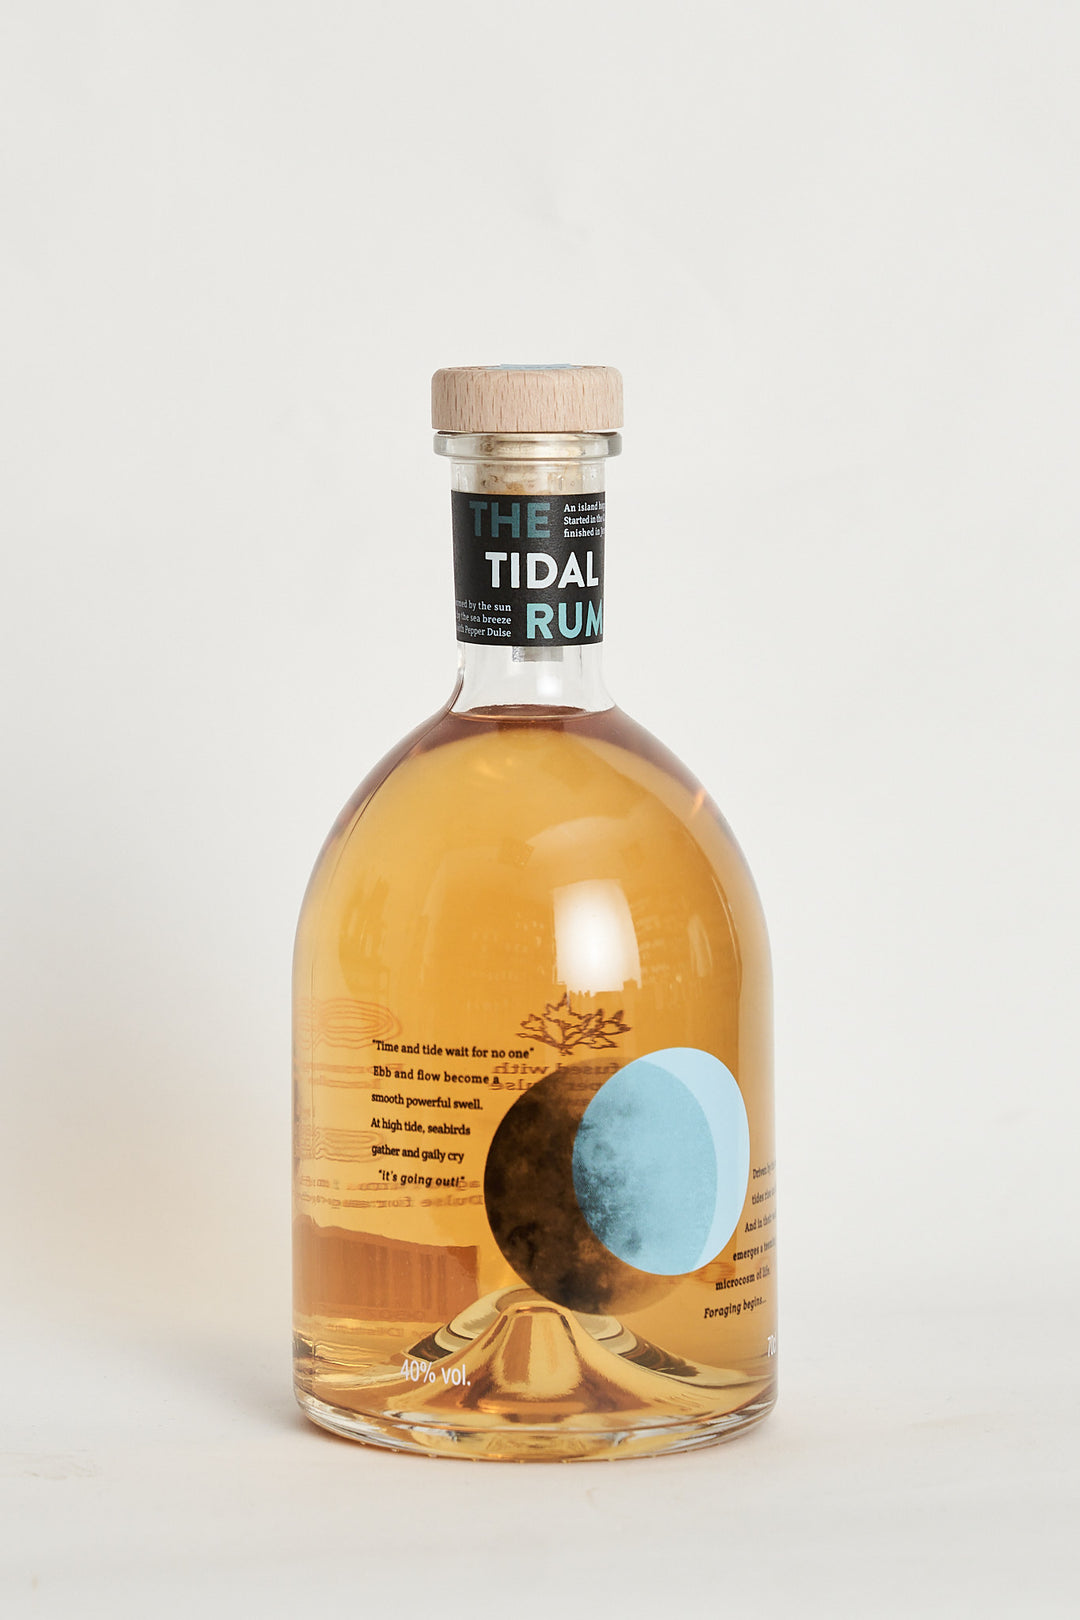 The Tidal Golden Aged Rum